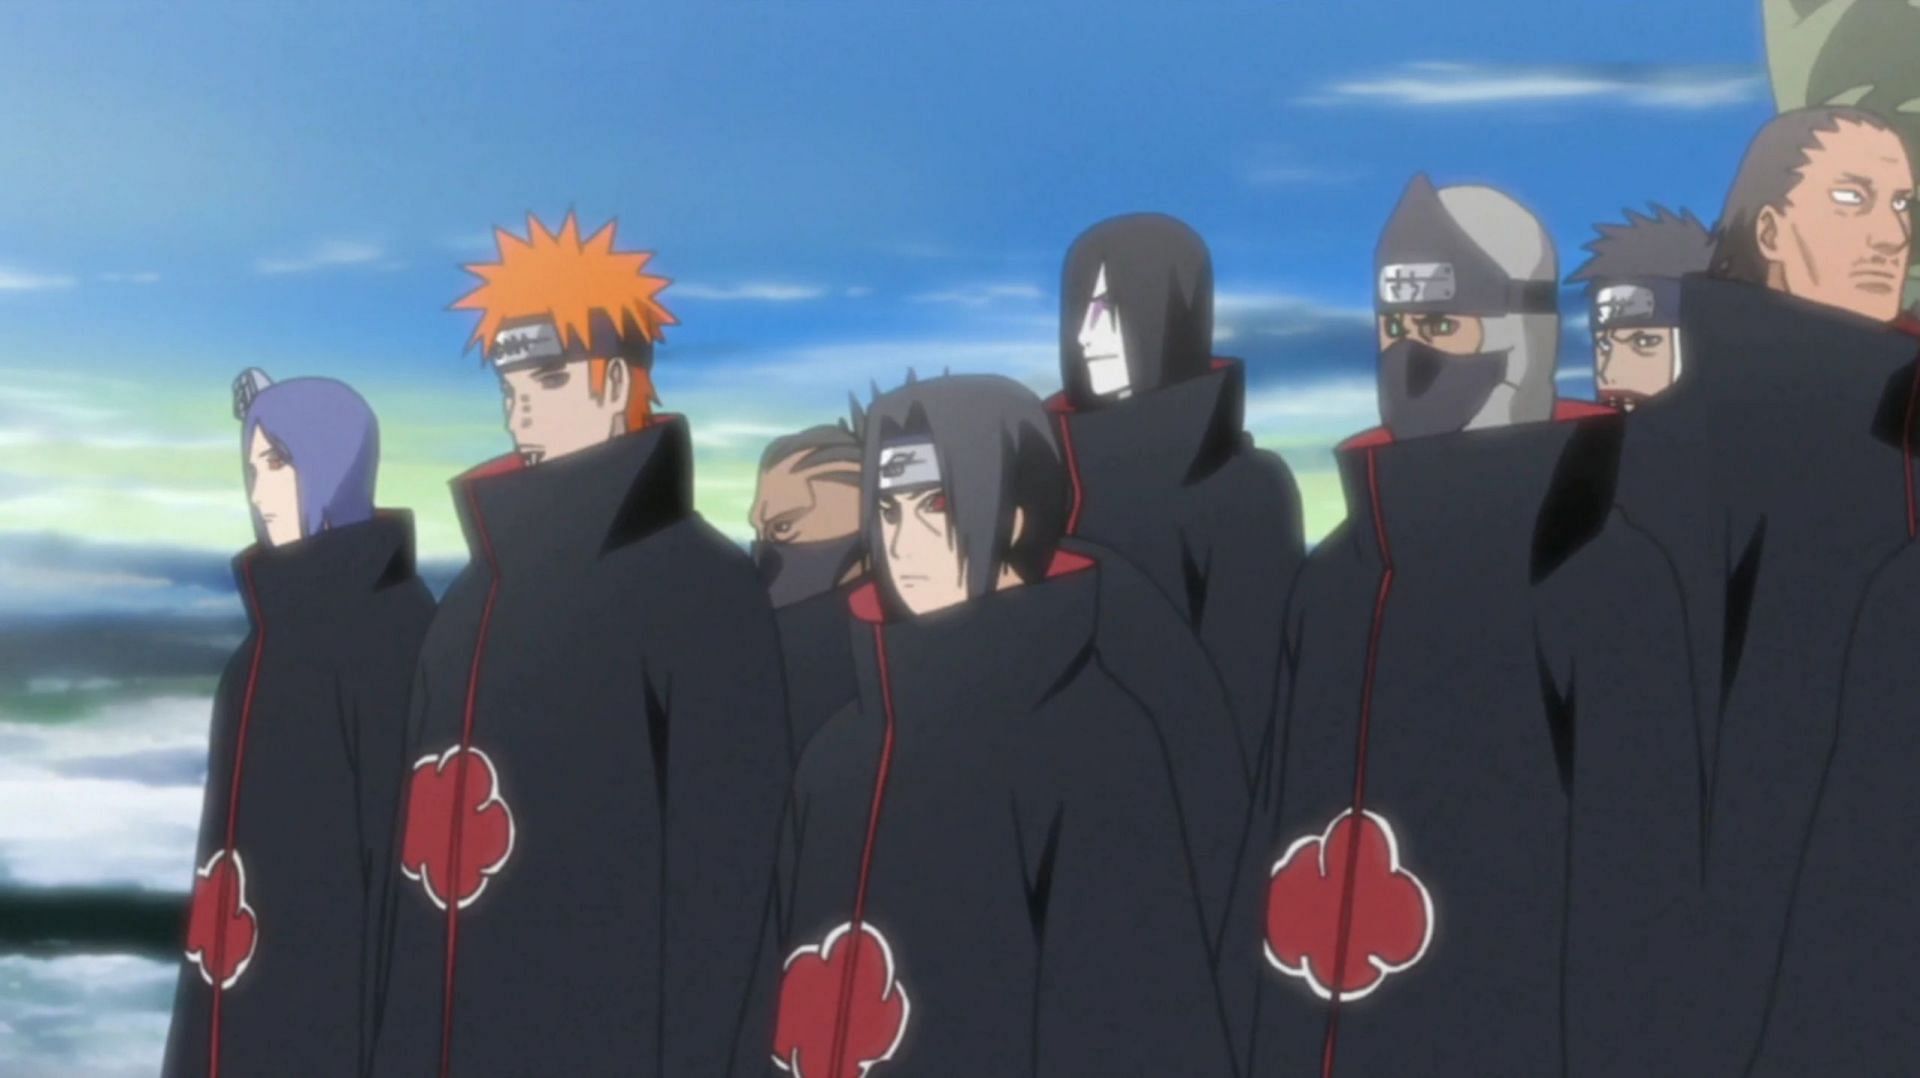 Akatsuki as seen in the anime Naruto (Image via Studio Pierrot)